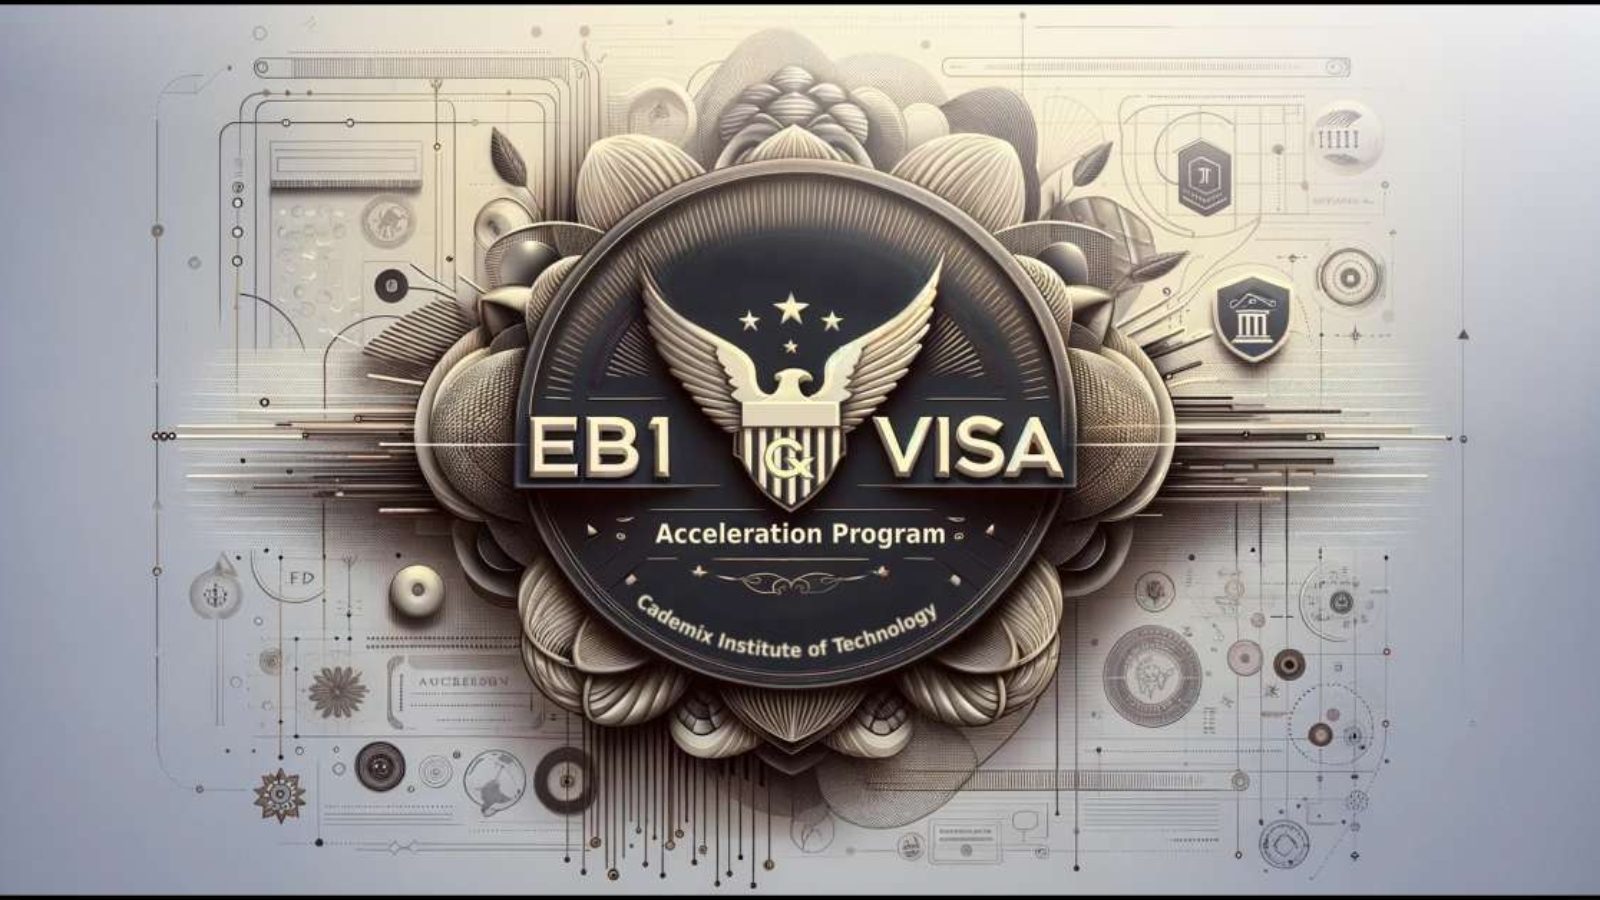 EB1 Visa Acceleration Program - Cademix Institute of Technology